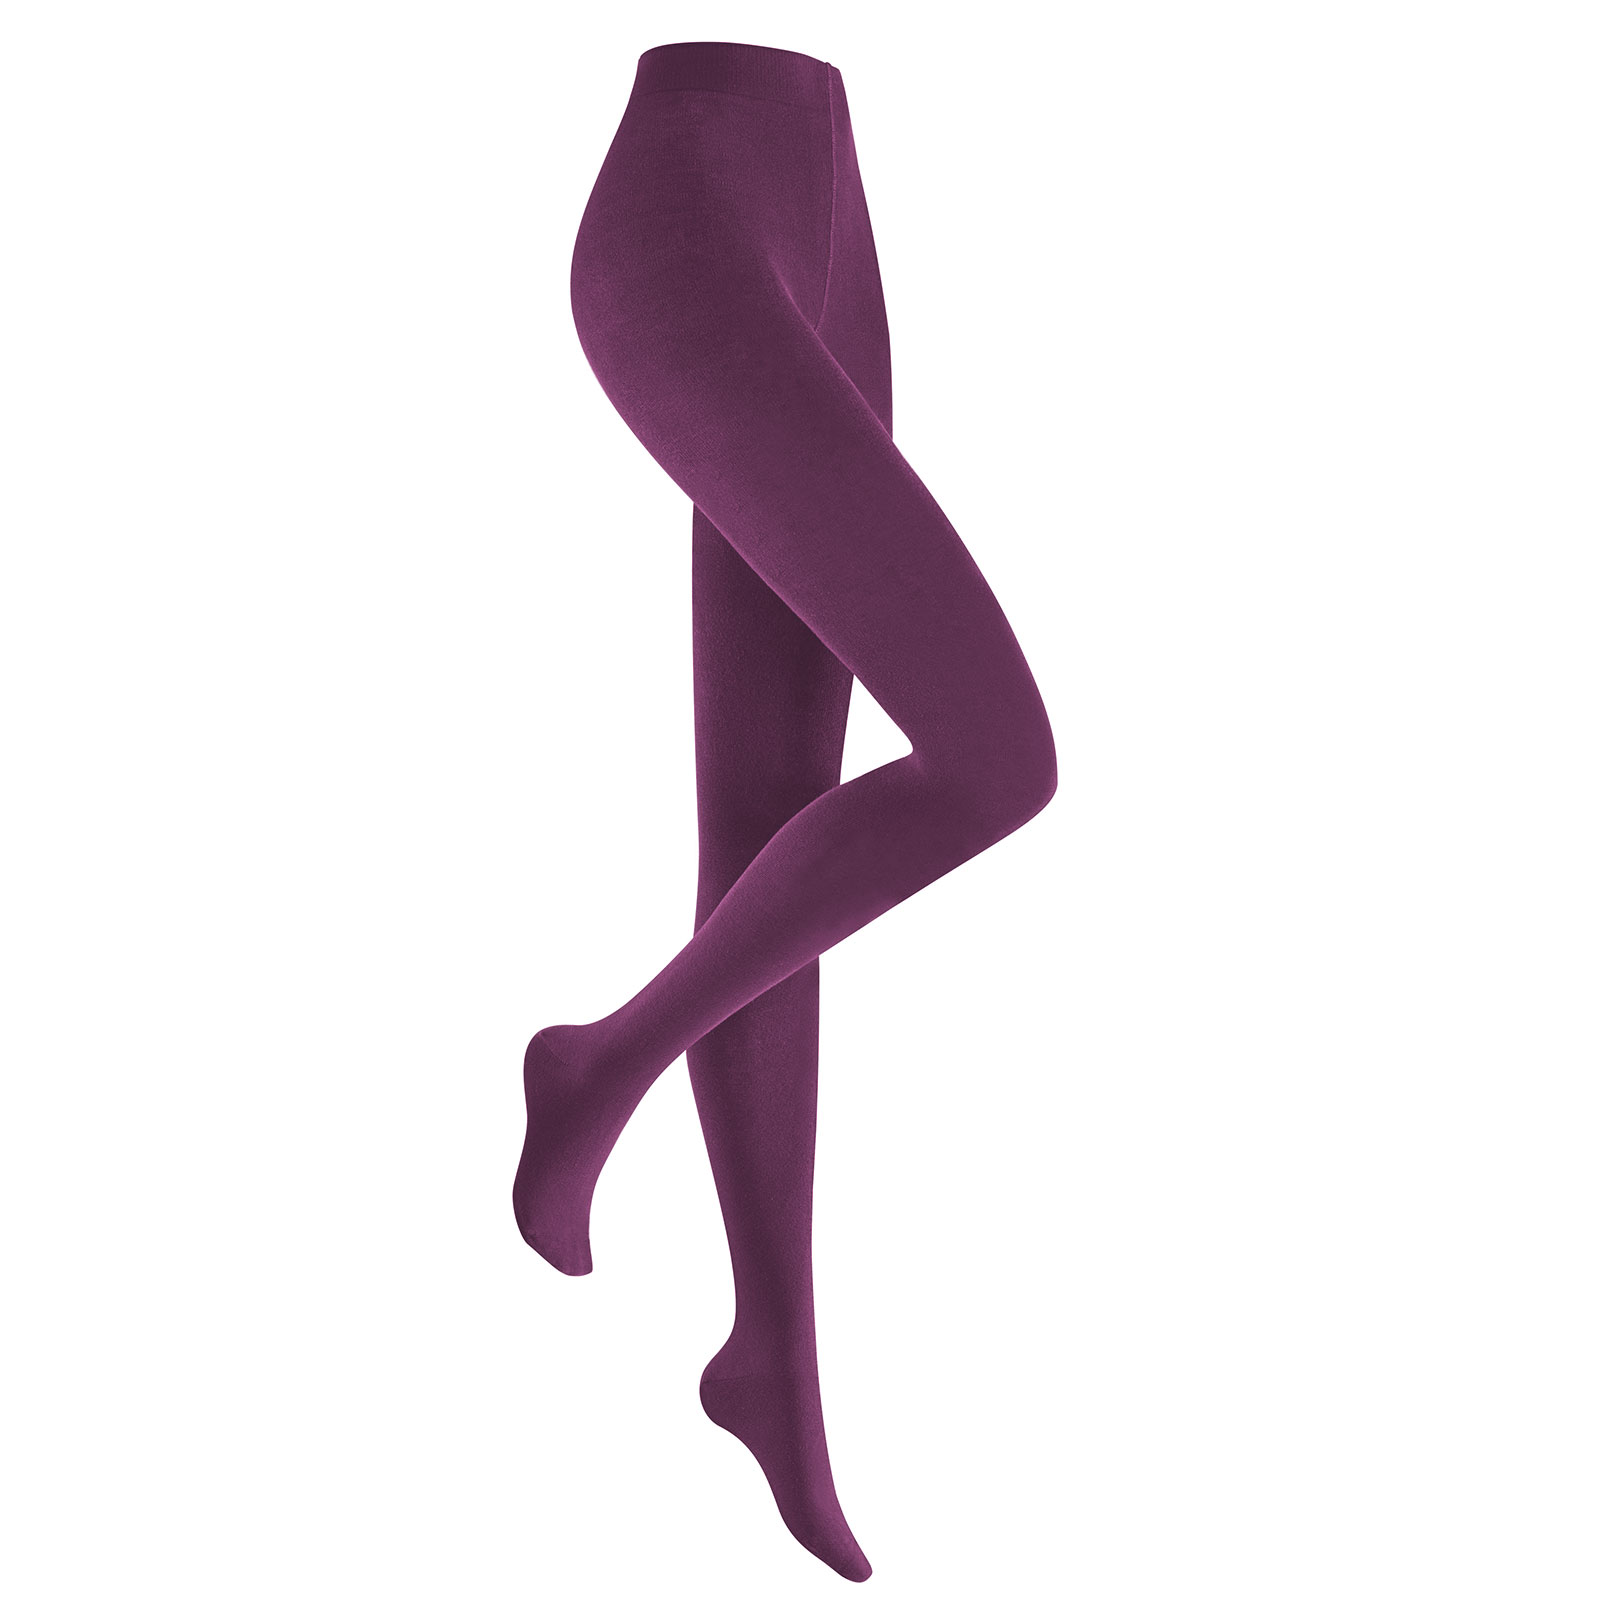 HUDSON Damen RELAX FINE  -  42/44 - Blickdichte Strumpfhose / Strickstrumpfhose mit hohem Baumwollanteil - Sweet lilac (Pink/Violett)